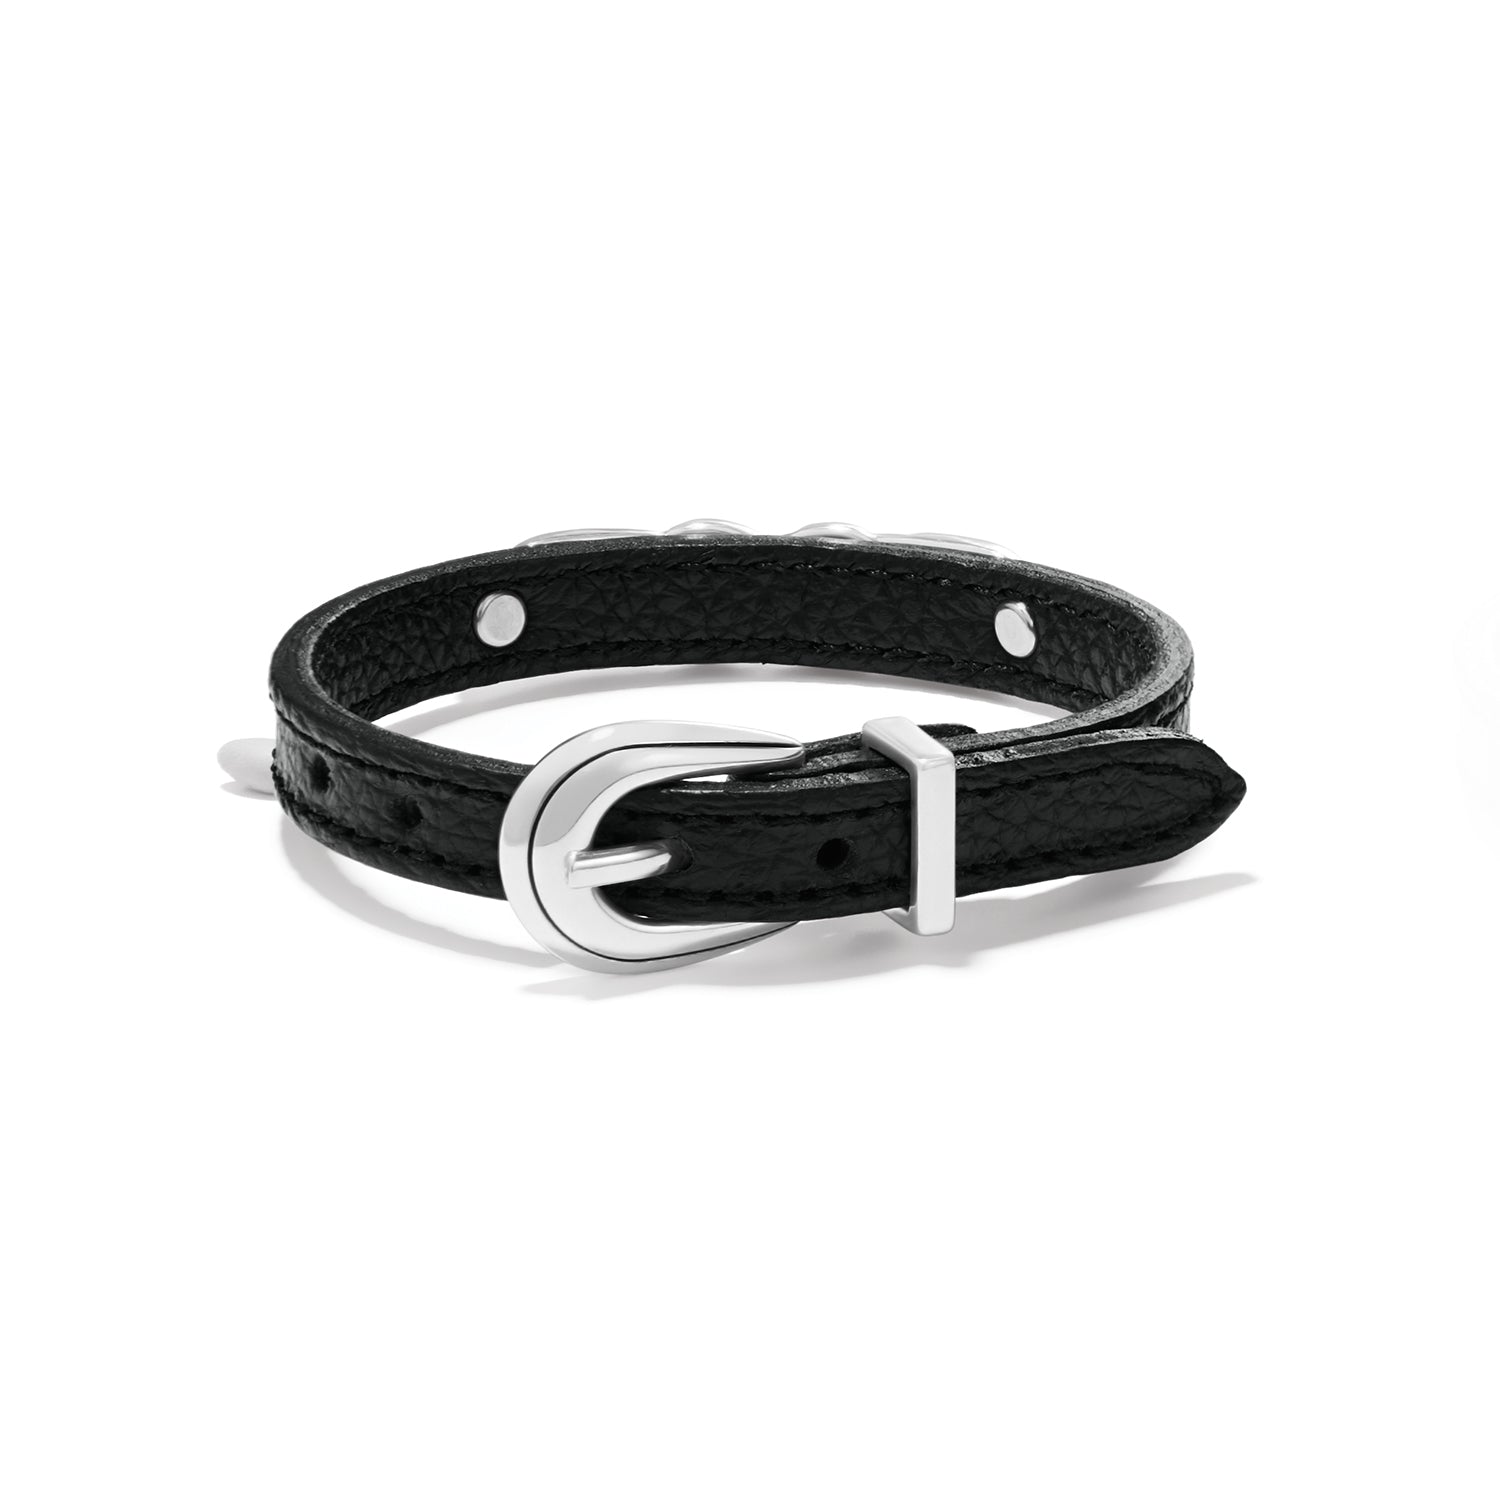 Interlok Braid Leather Bracelet Black